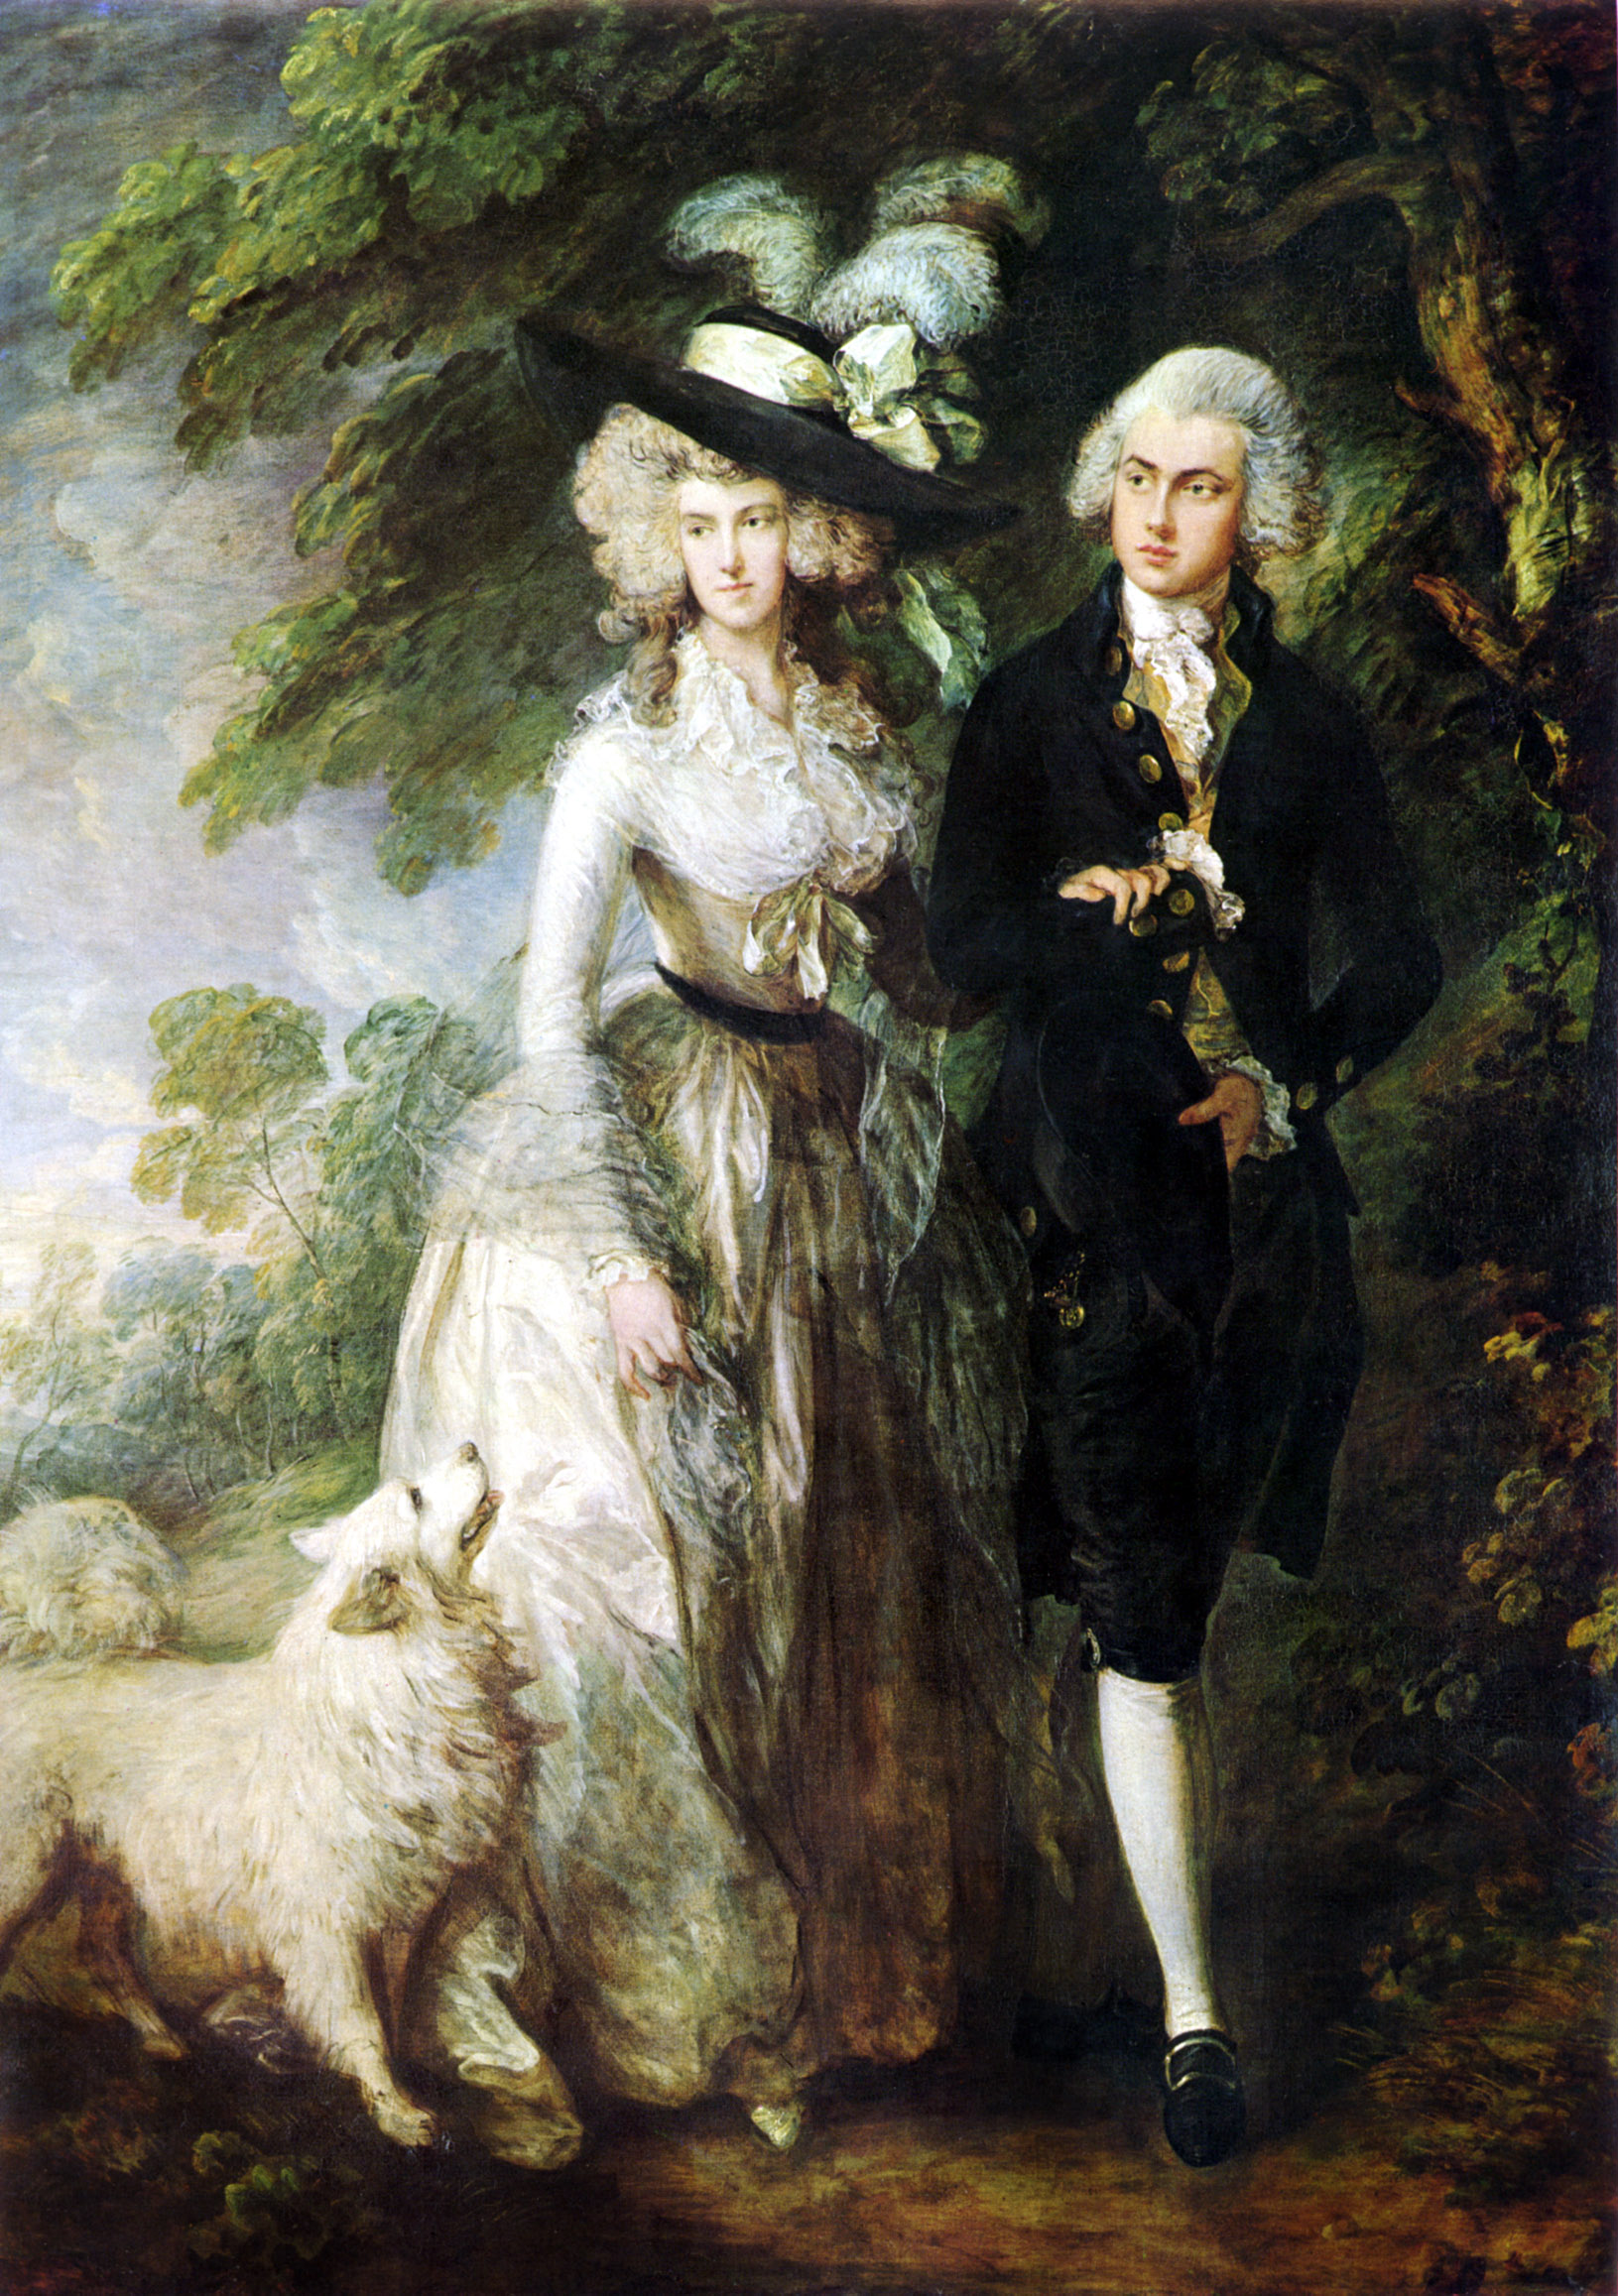 1775–1795 in Western fashion - Wikipedia